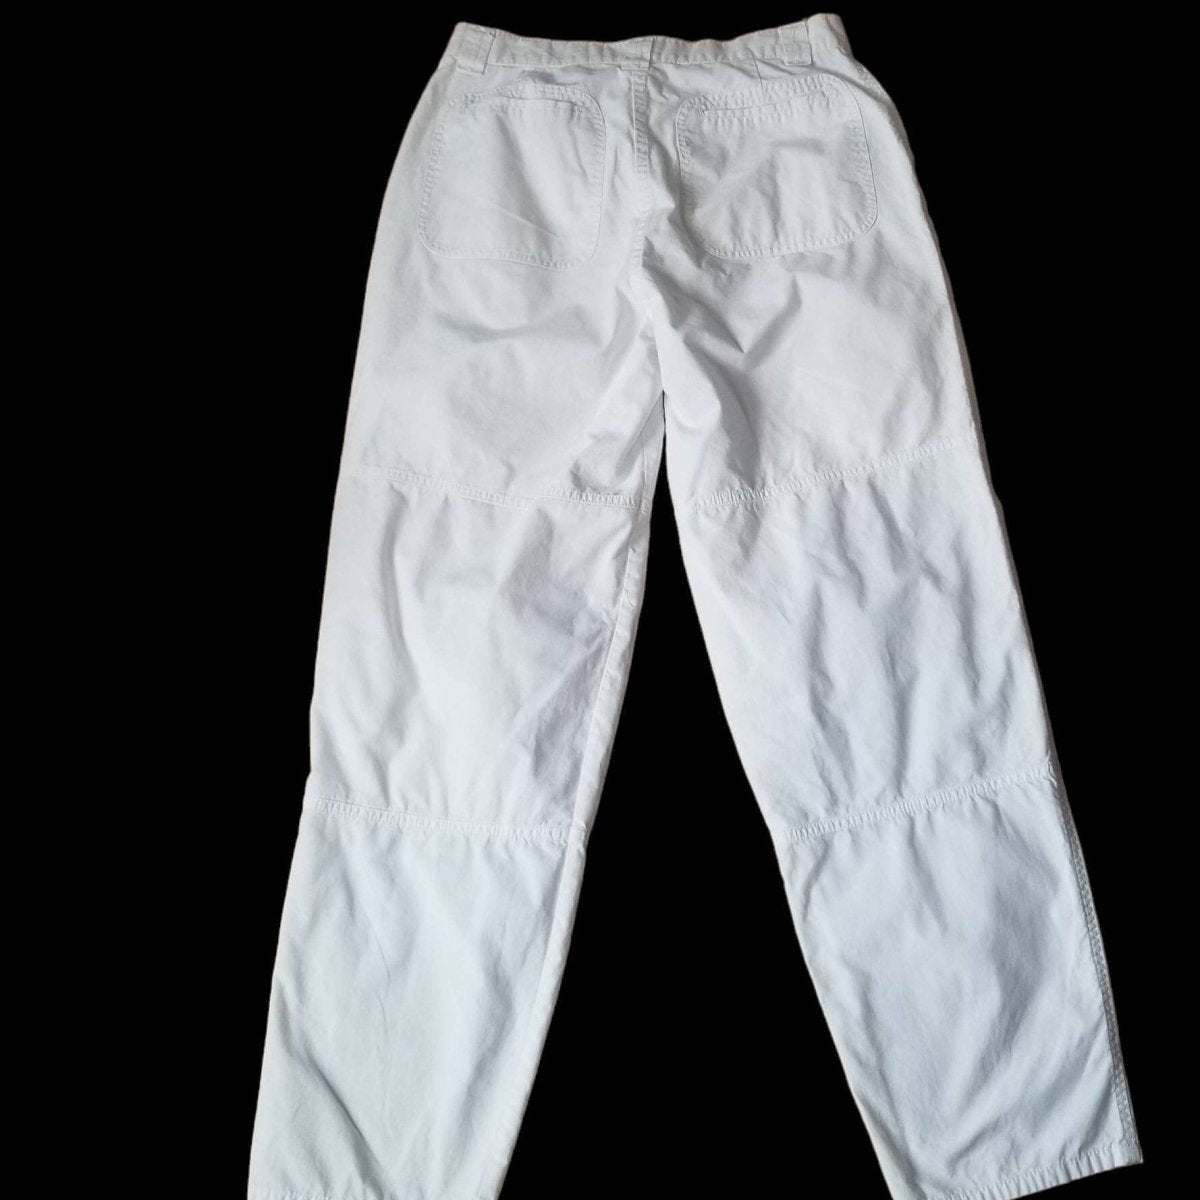 RARE 80s White Cargo Pants Men 31X30 - themallvintage The Mall Vintage 1980s Menswear Pants